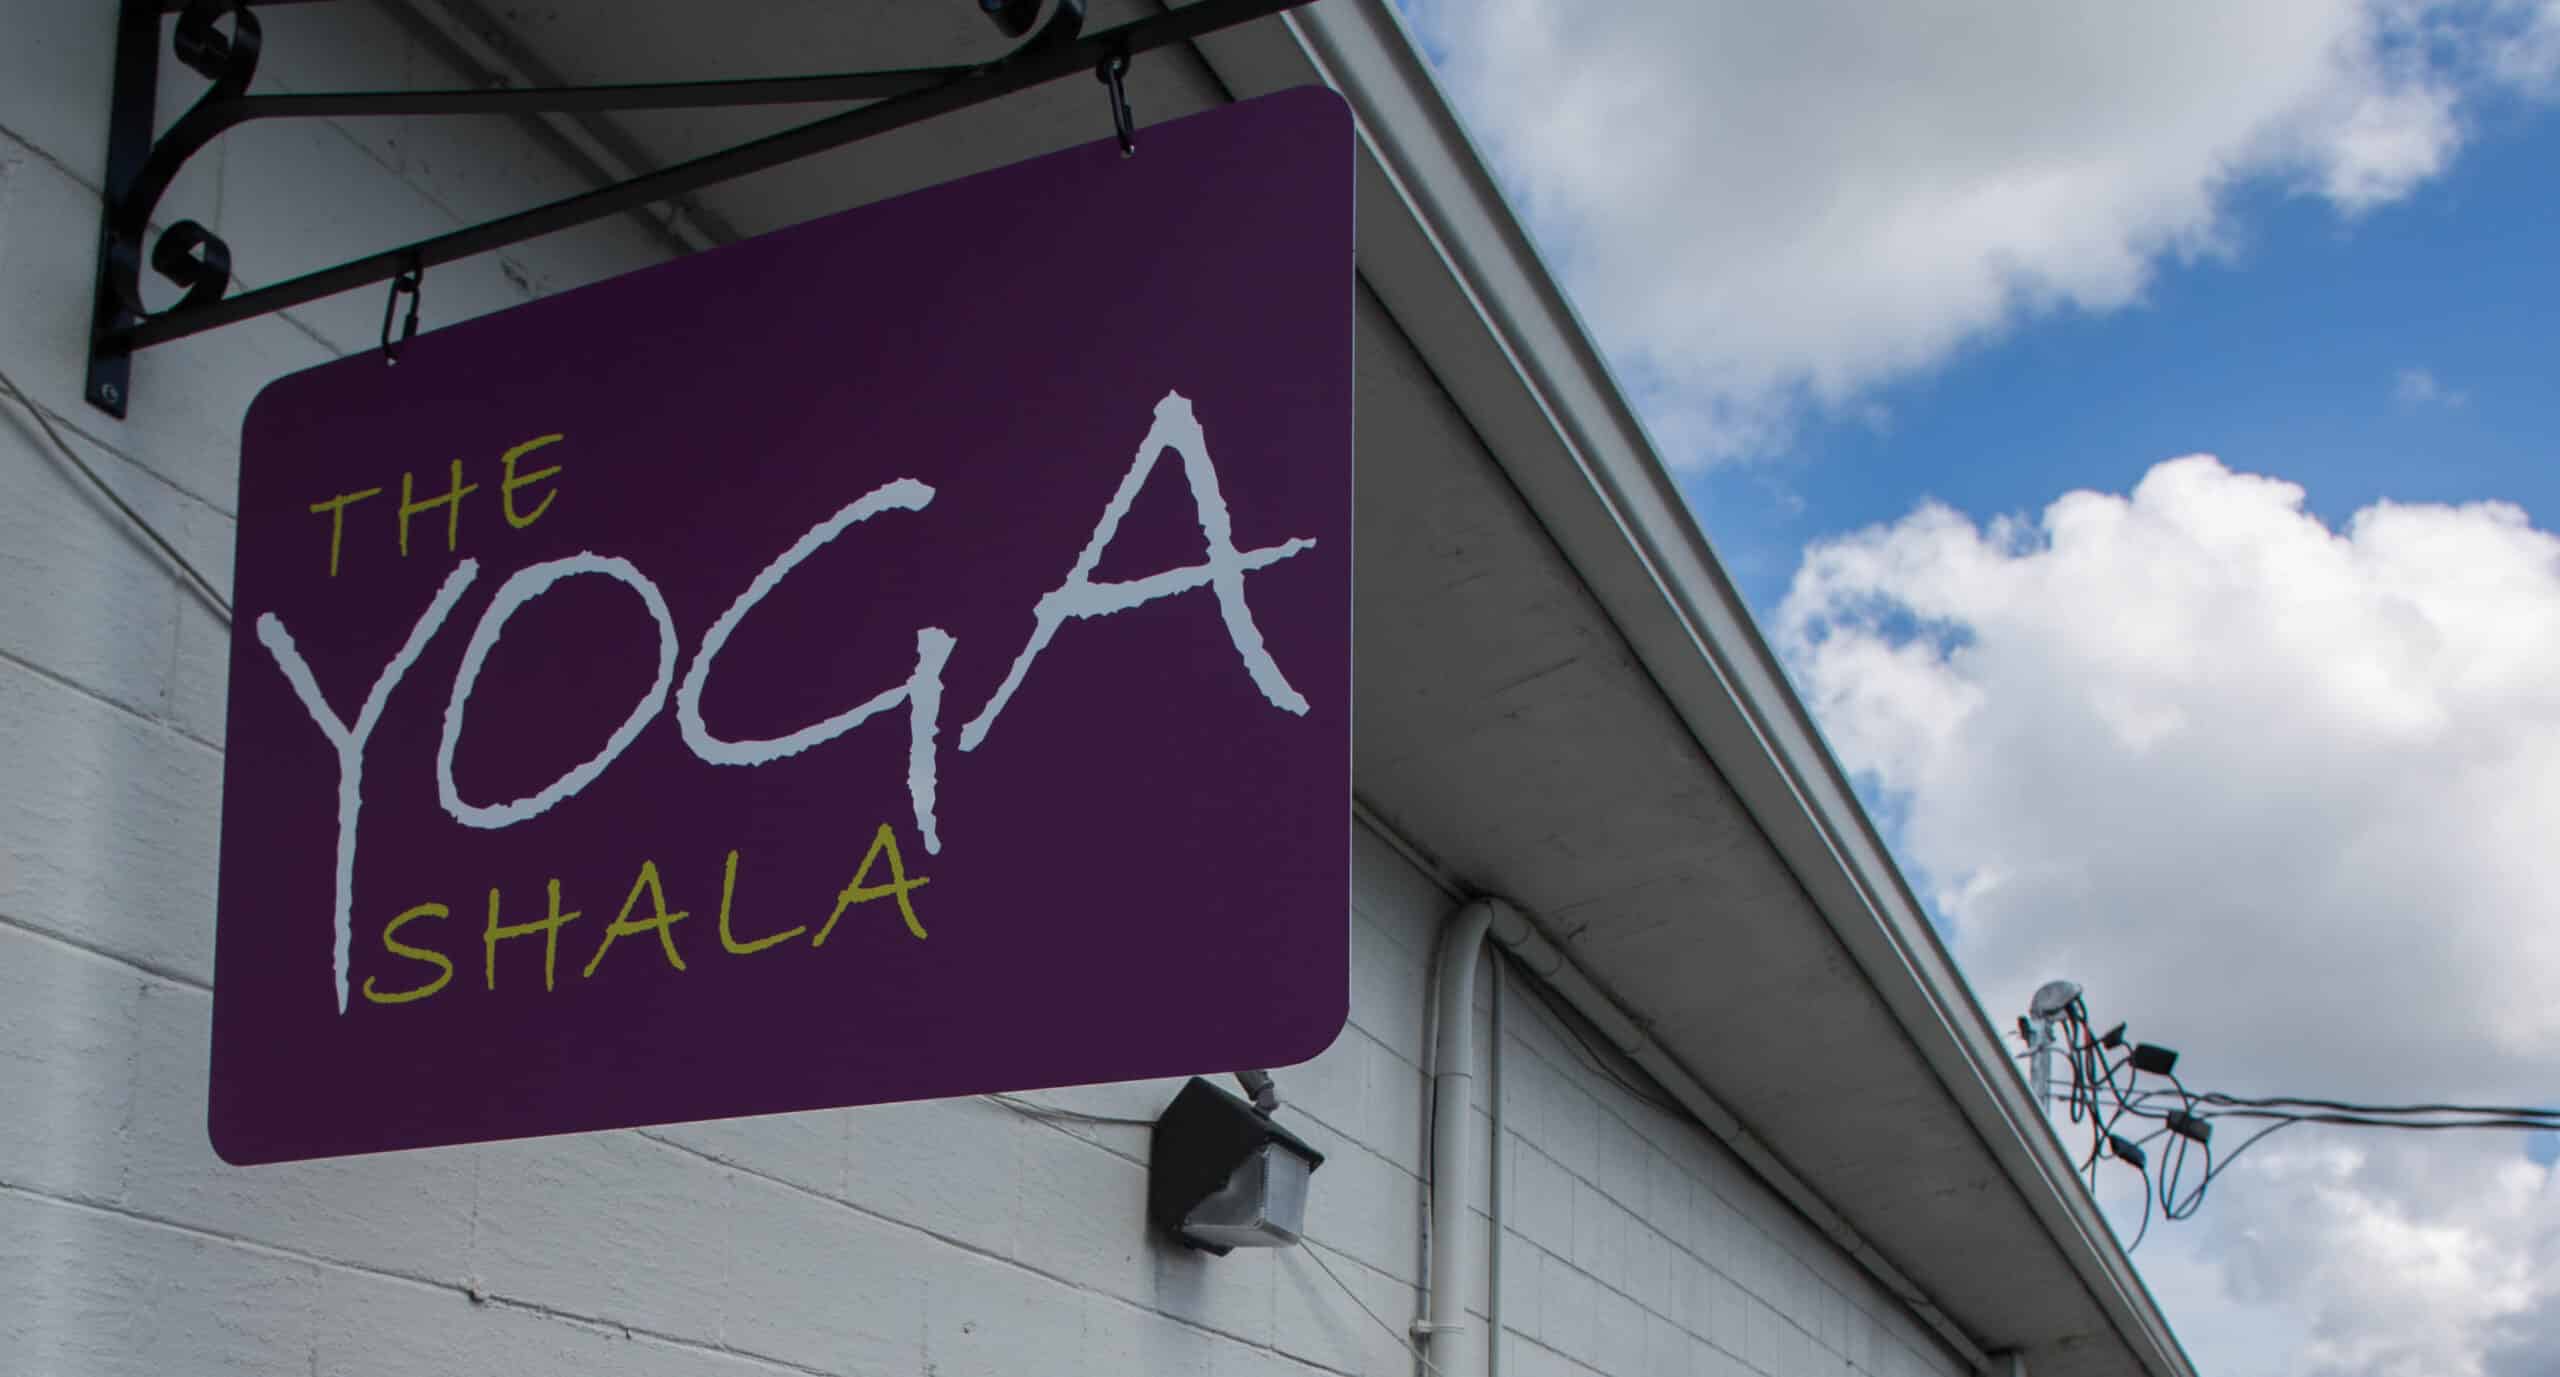 The Yoga Shala in Winter Park Florida offers daily yoga classes in Ashtanga Yoga